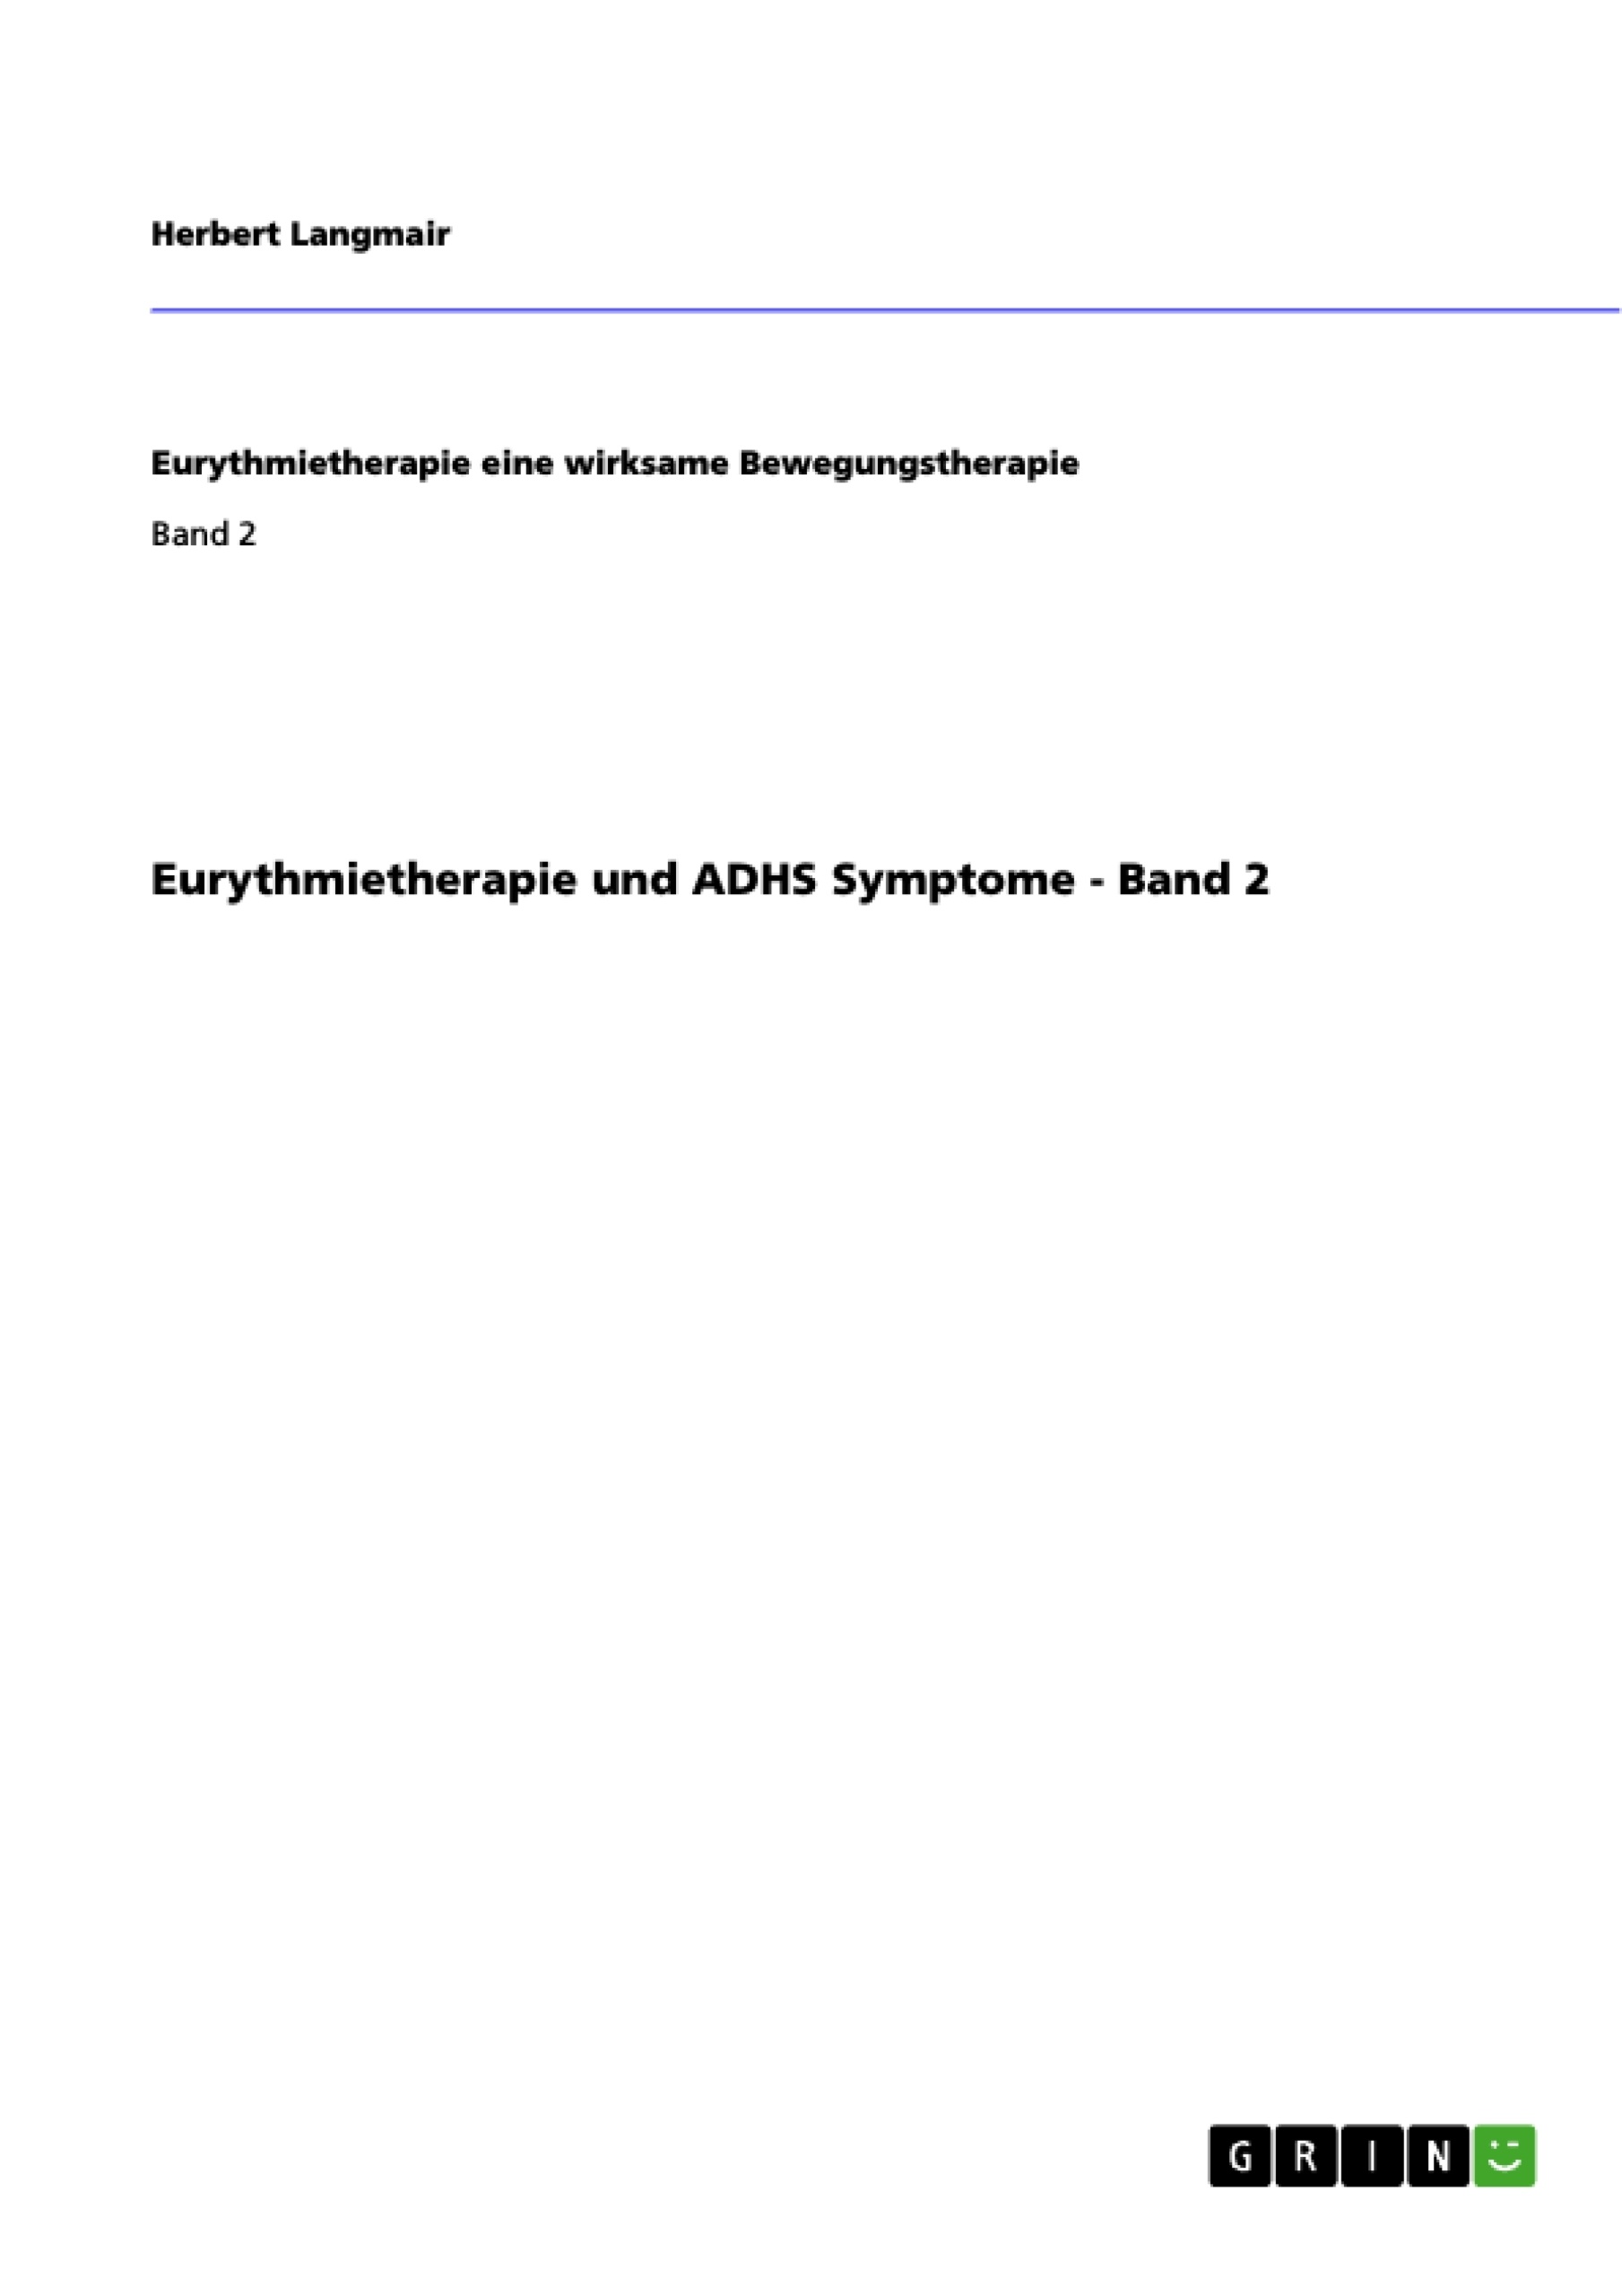 Title: Eurythmietherapie und ADHS Symptome - Band 2